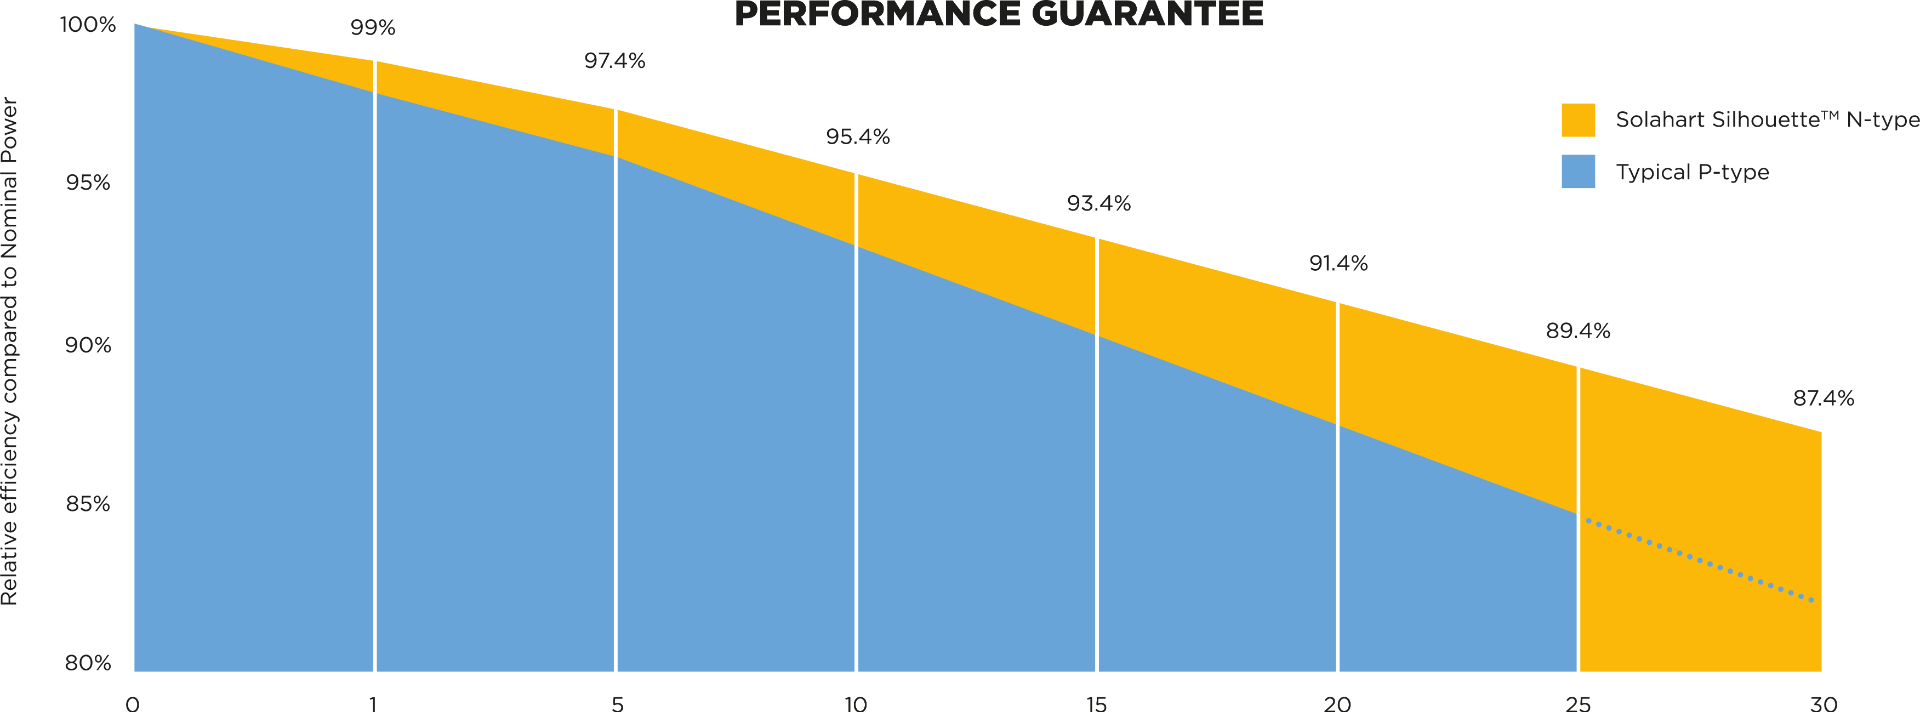 Performance Chart for Solahart Silhouette 415w Solar Panels